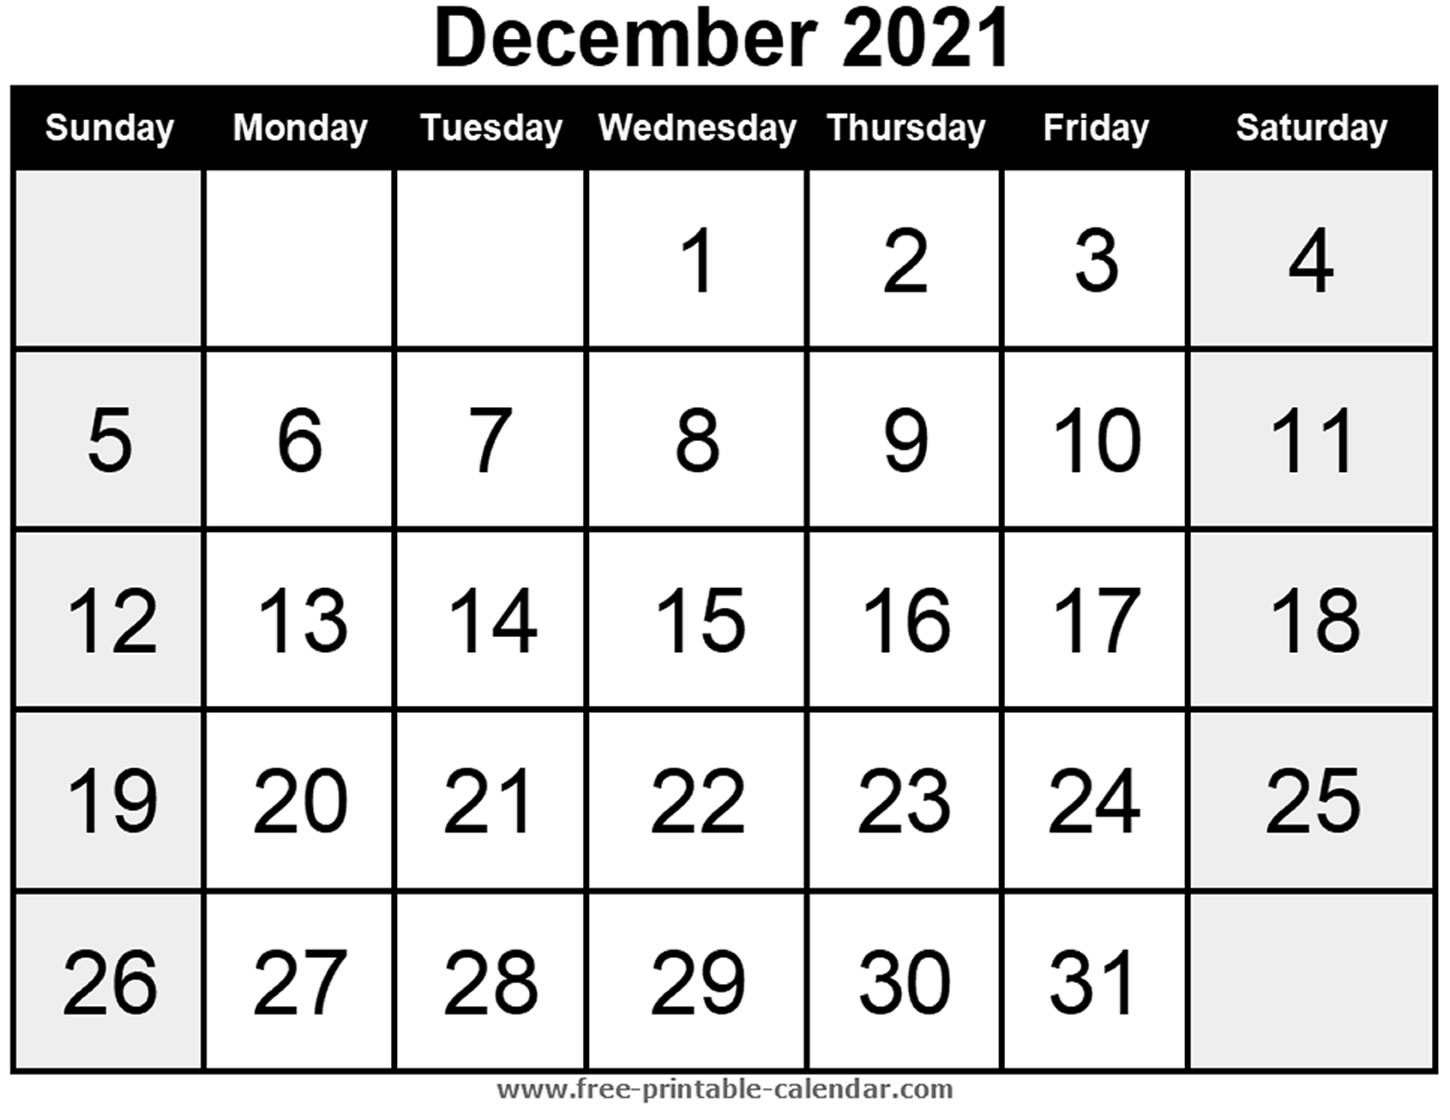 Blank Calendar December 2021 - Free-Printable-Calendar Calendar For December 2021